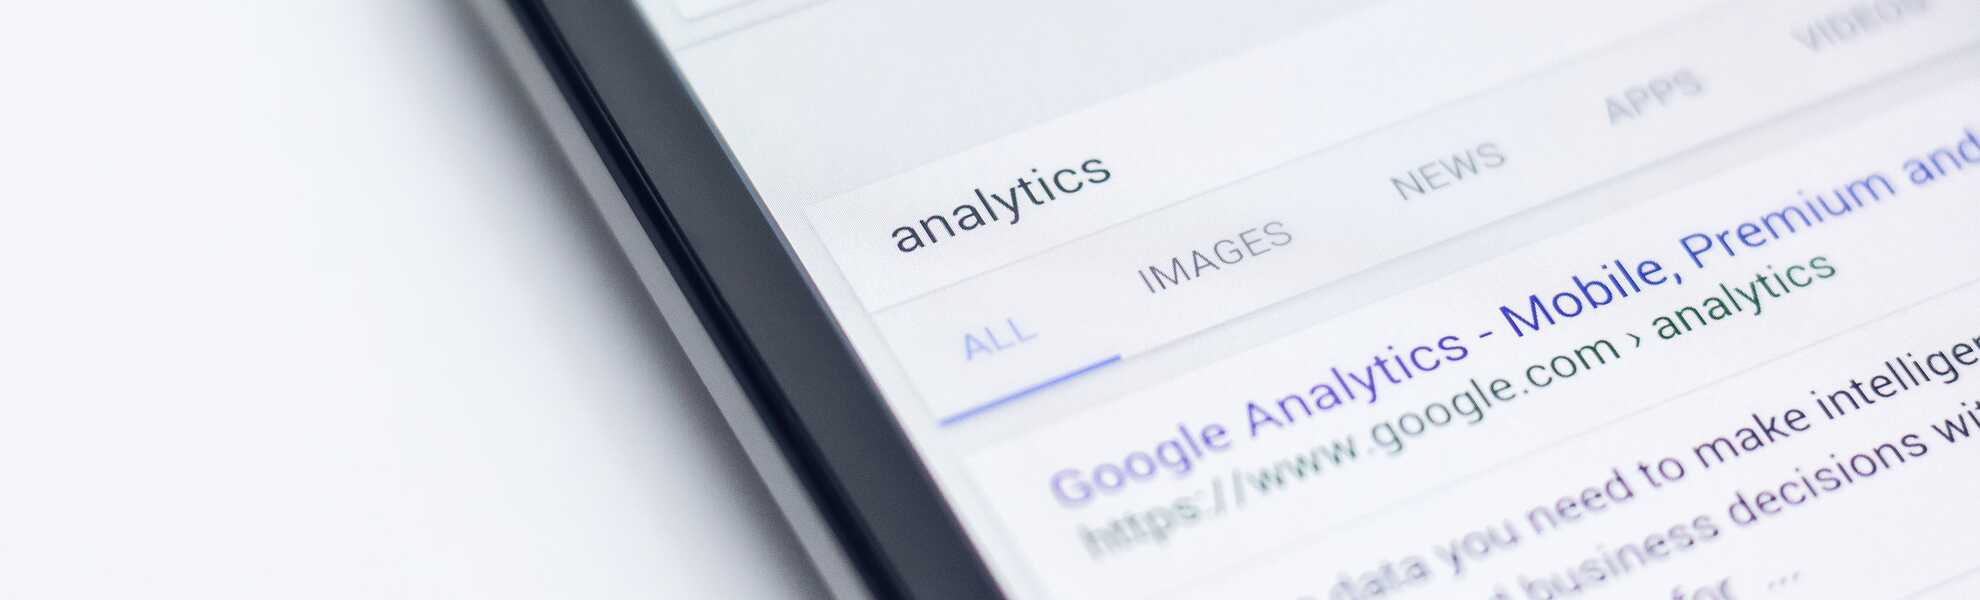 Google analytics on a smartphone